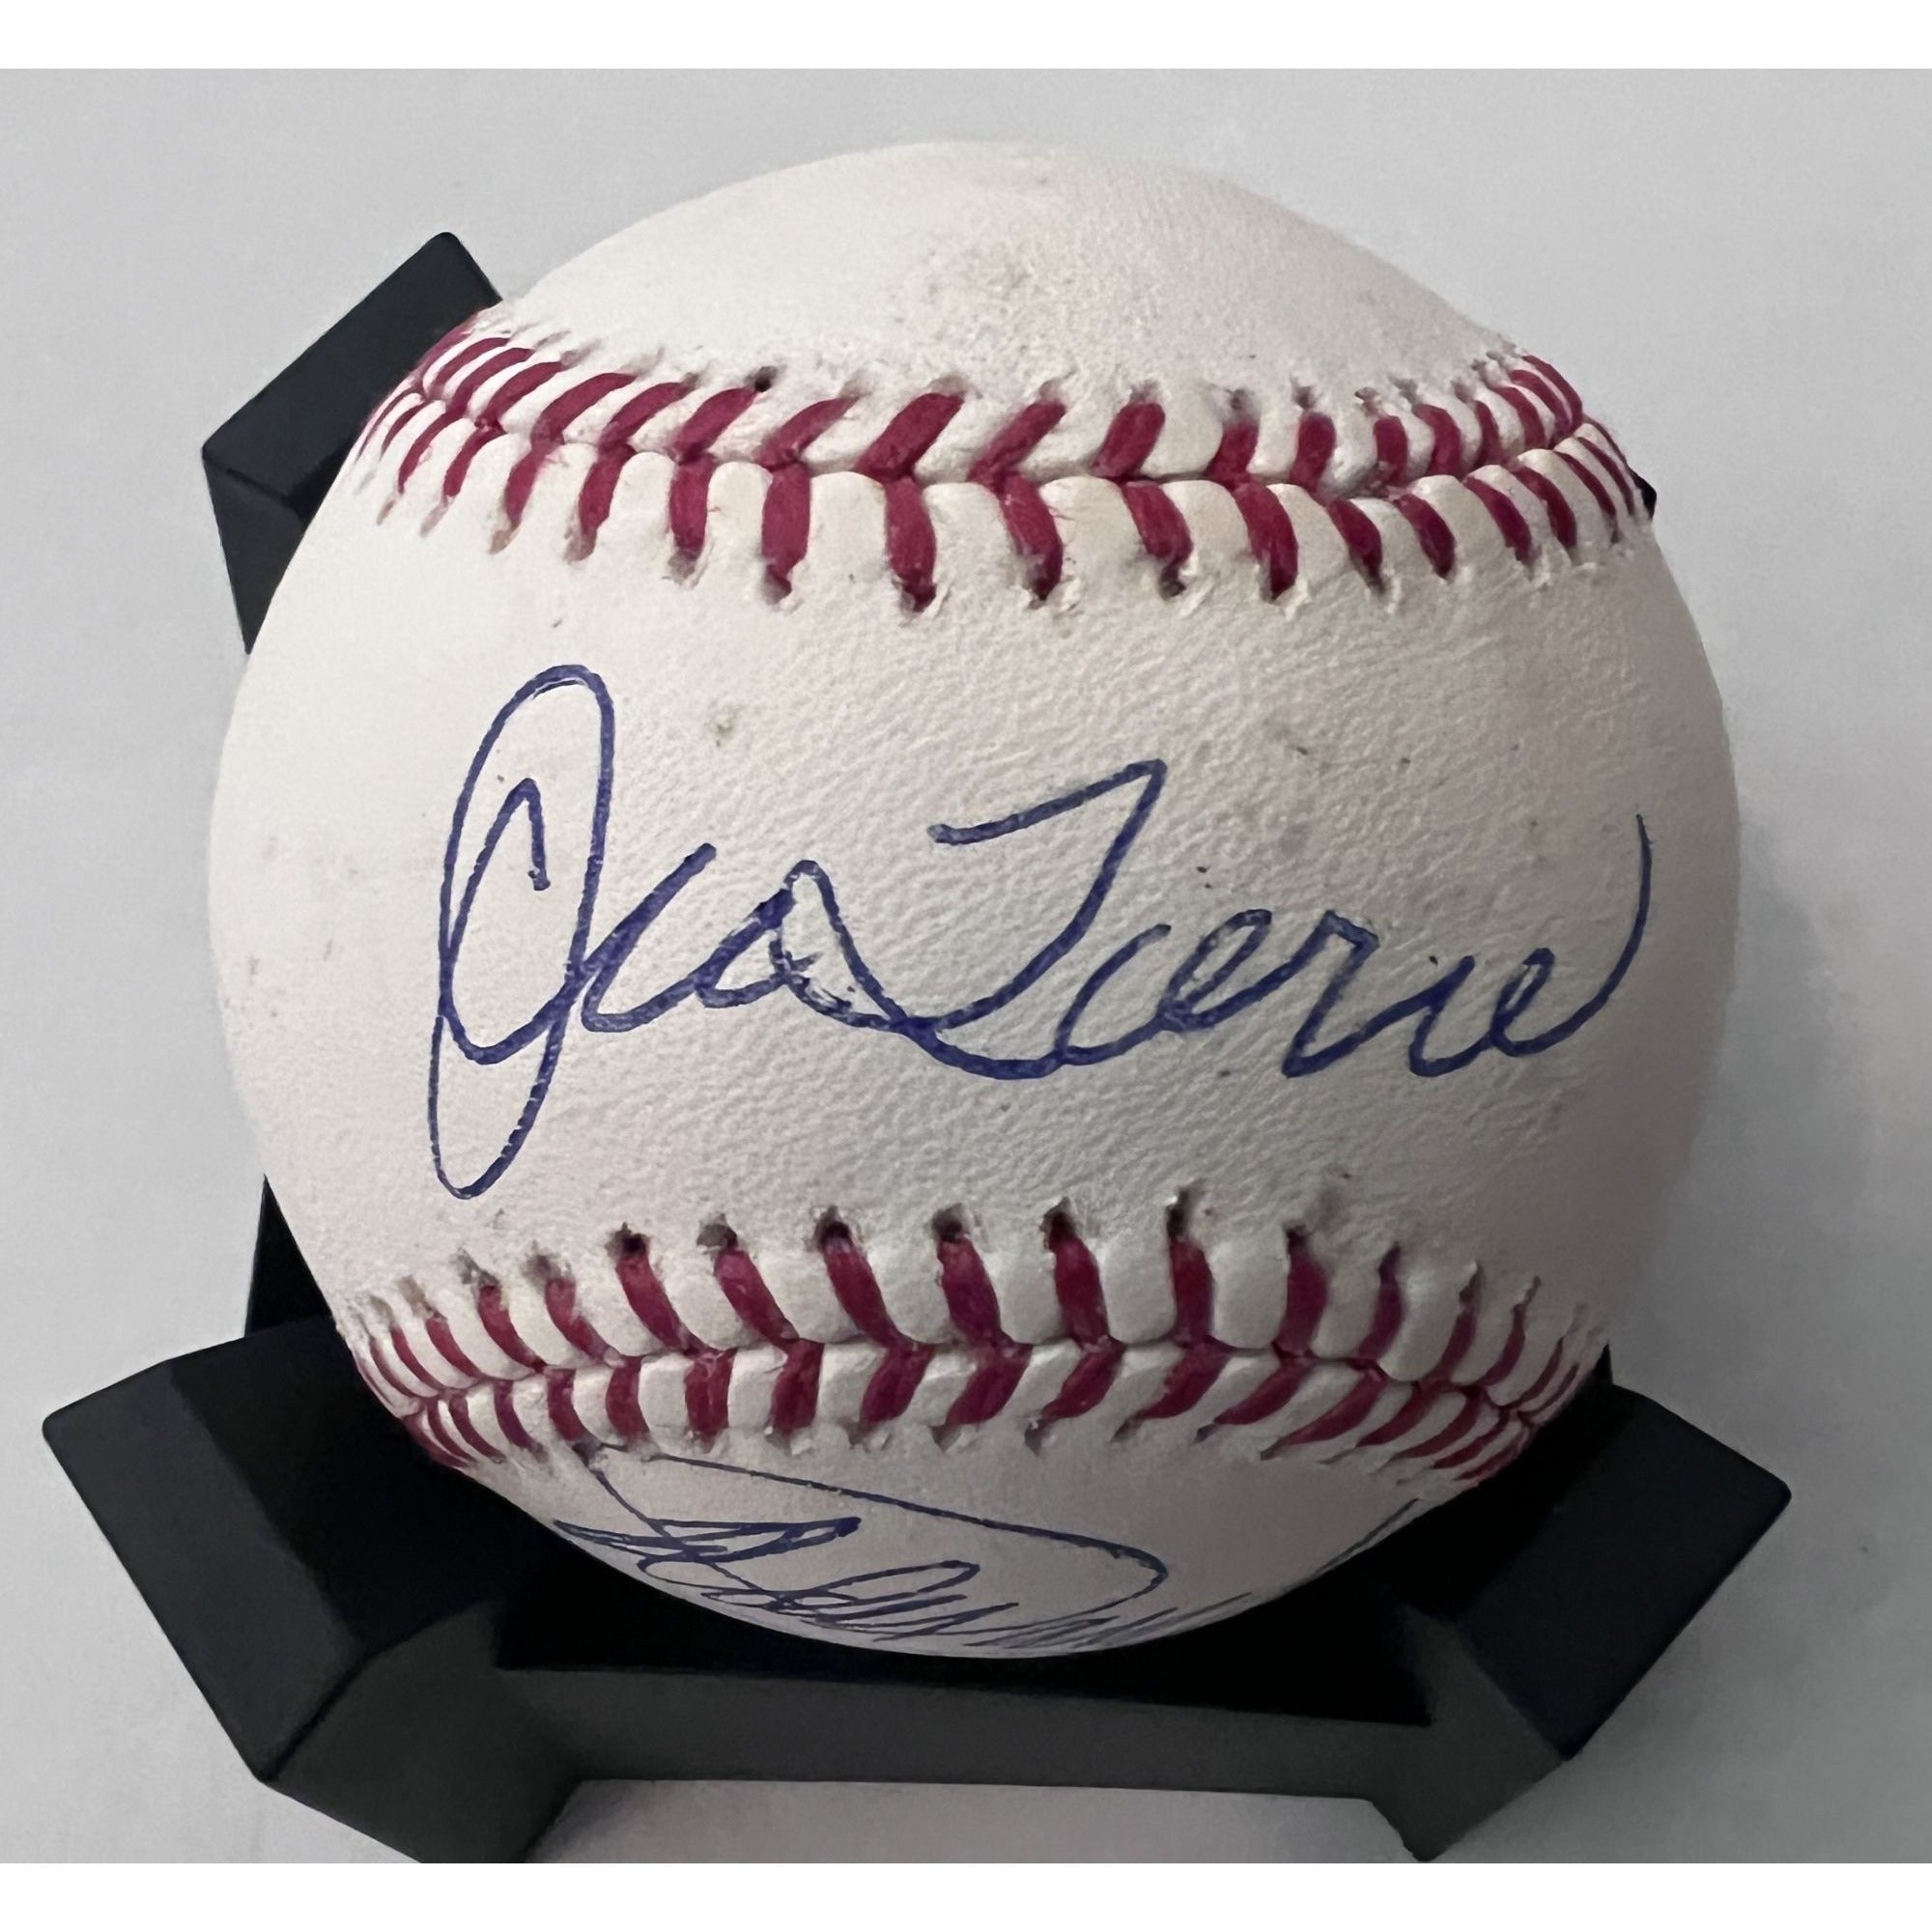 New York Yankees Derek Jeter Jorge Posada Bernie Williams Joe Torre official Rawlings MLB baseball signed with proof